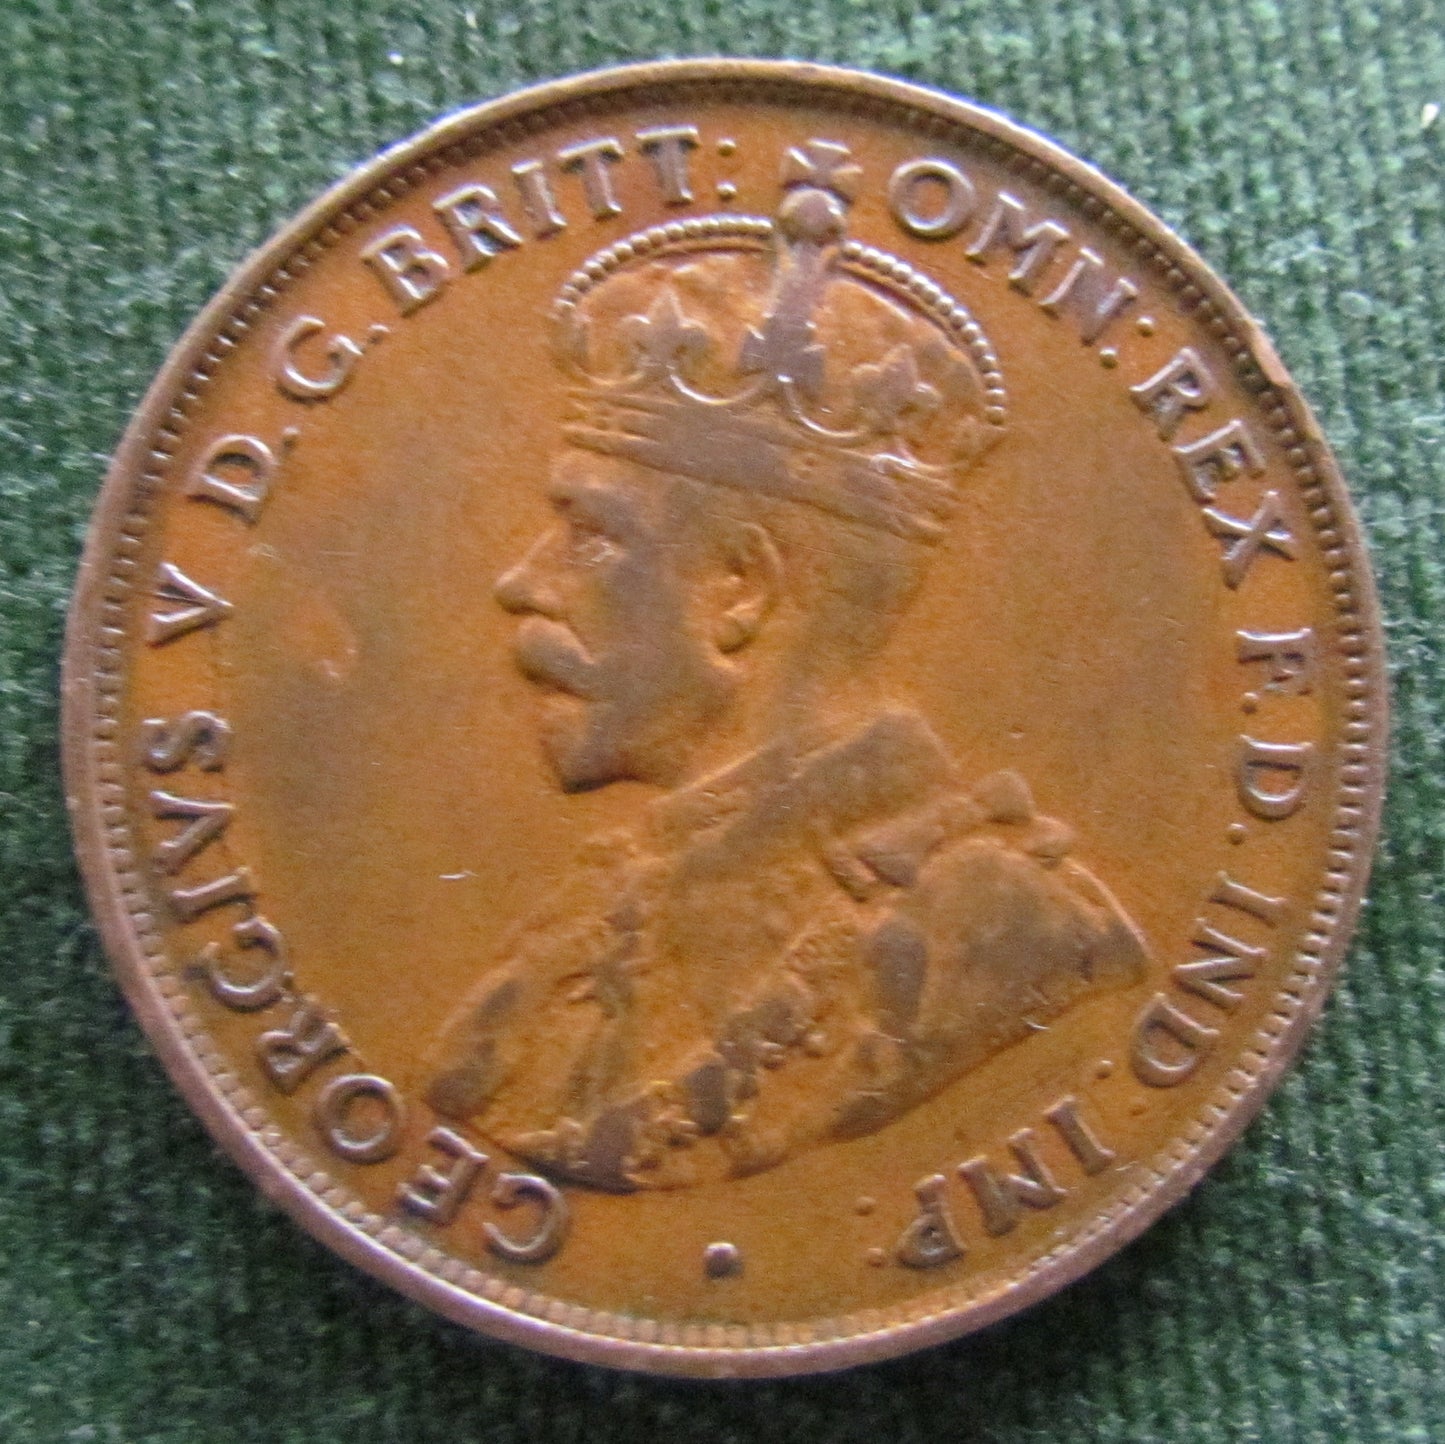 Australian 1927 1d 1 Penny King George V Coin - Variety Die Crack